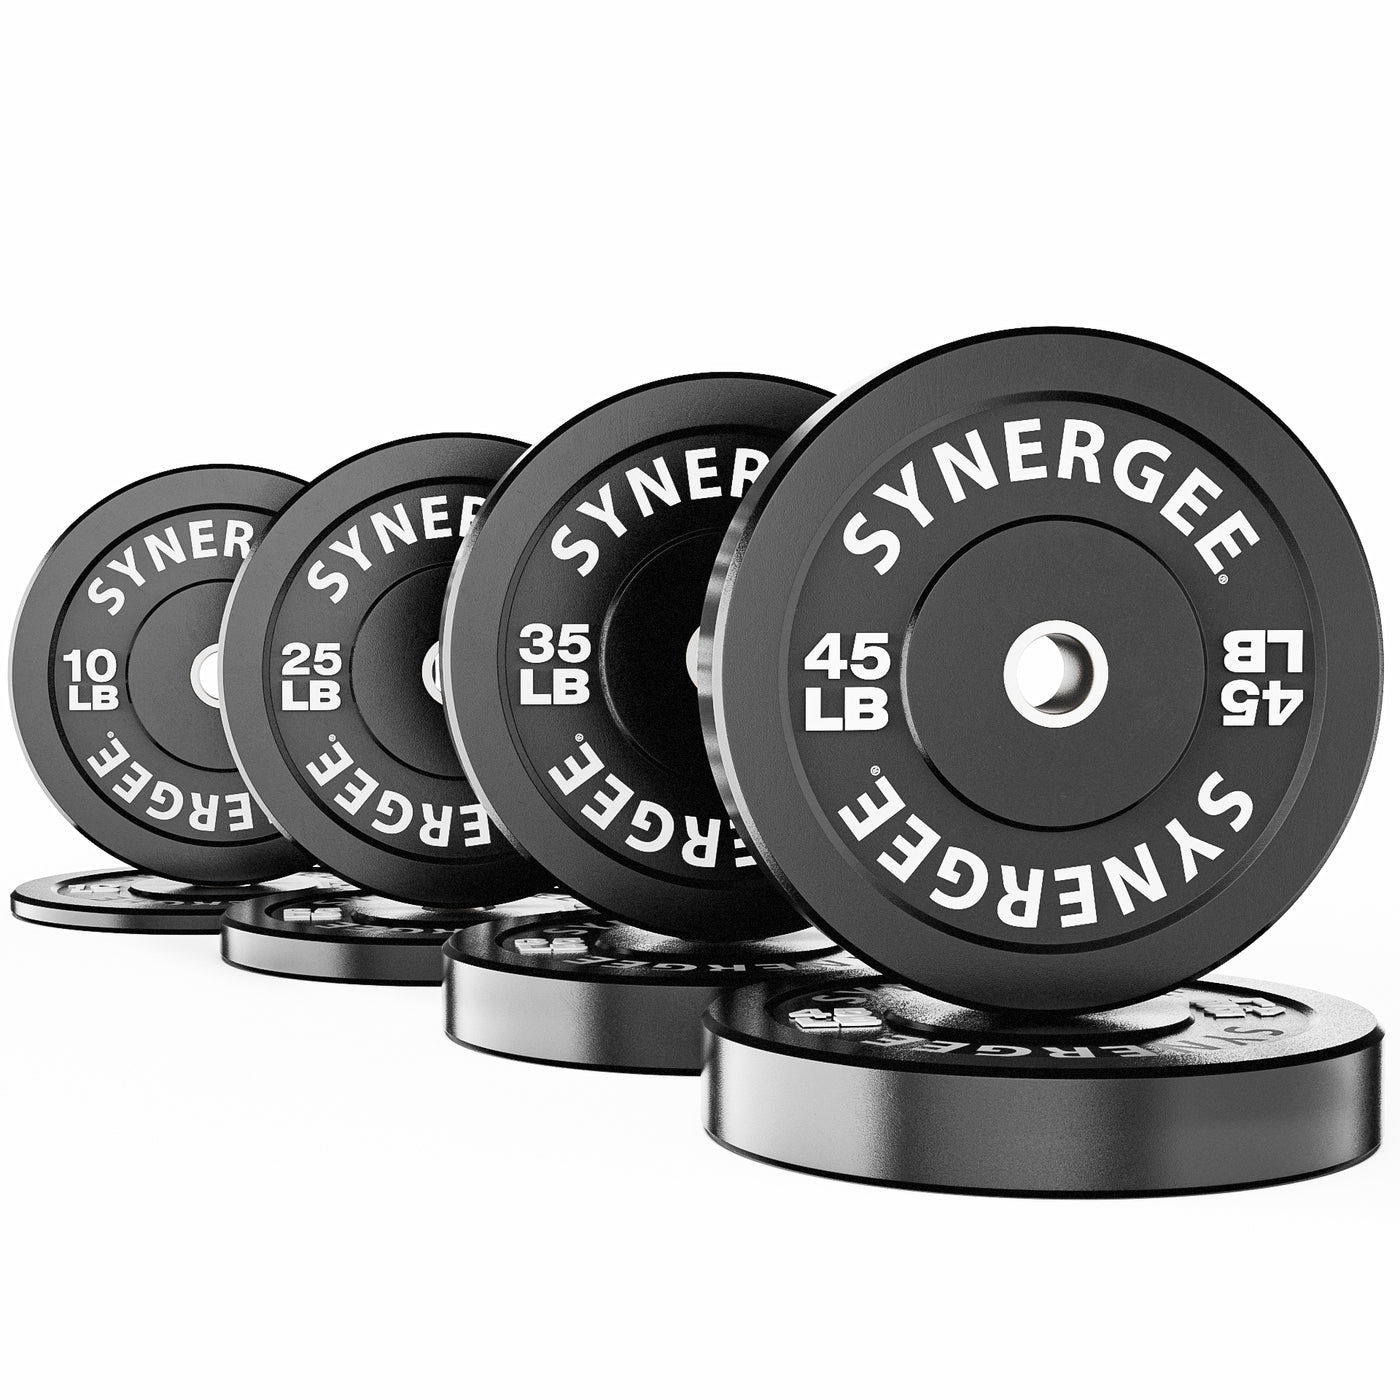 Synergee Bumper Plates - 230lb Set